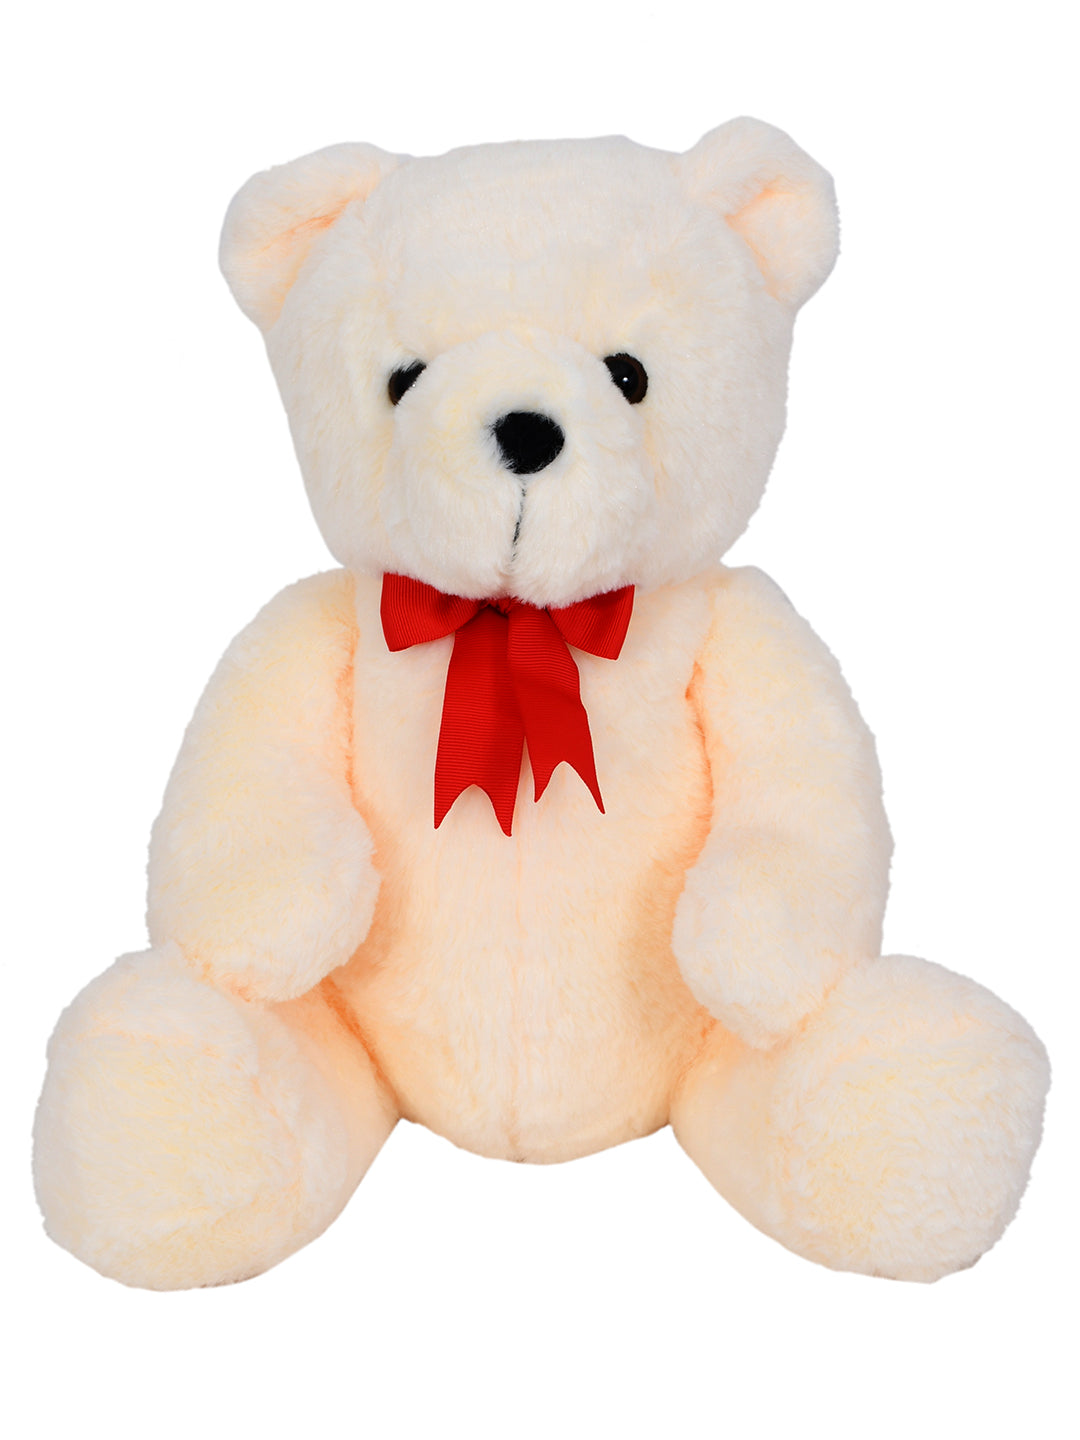 Mirada Plush Stuffed Biege Bear Soft Toy with Red Bow - 35cm